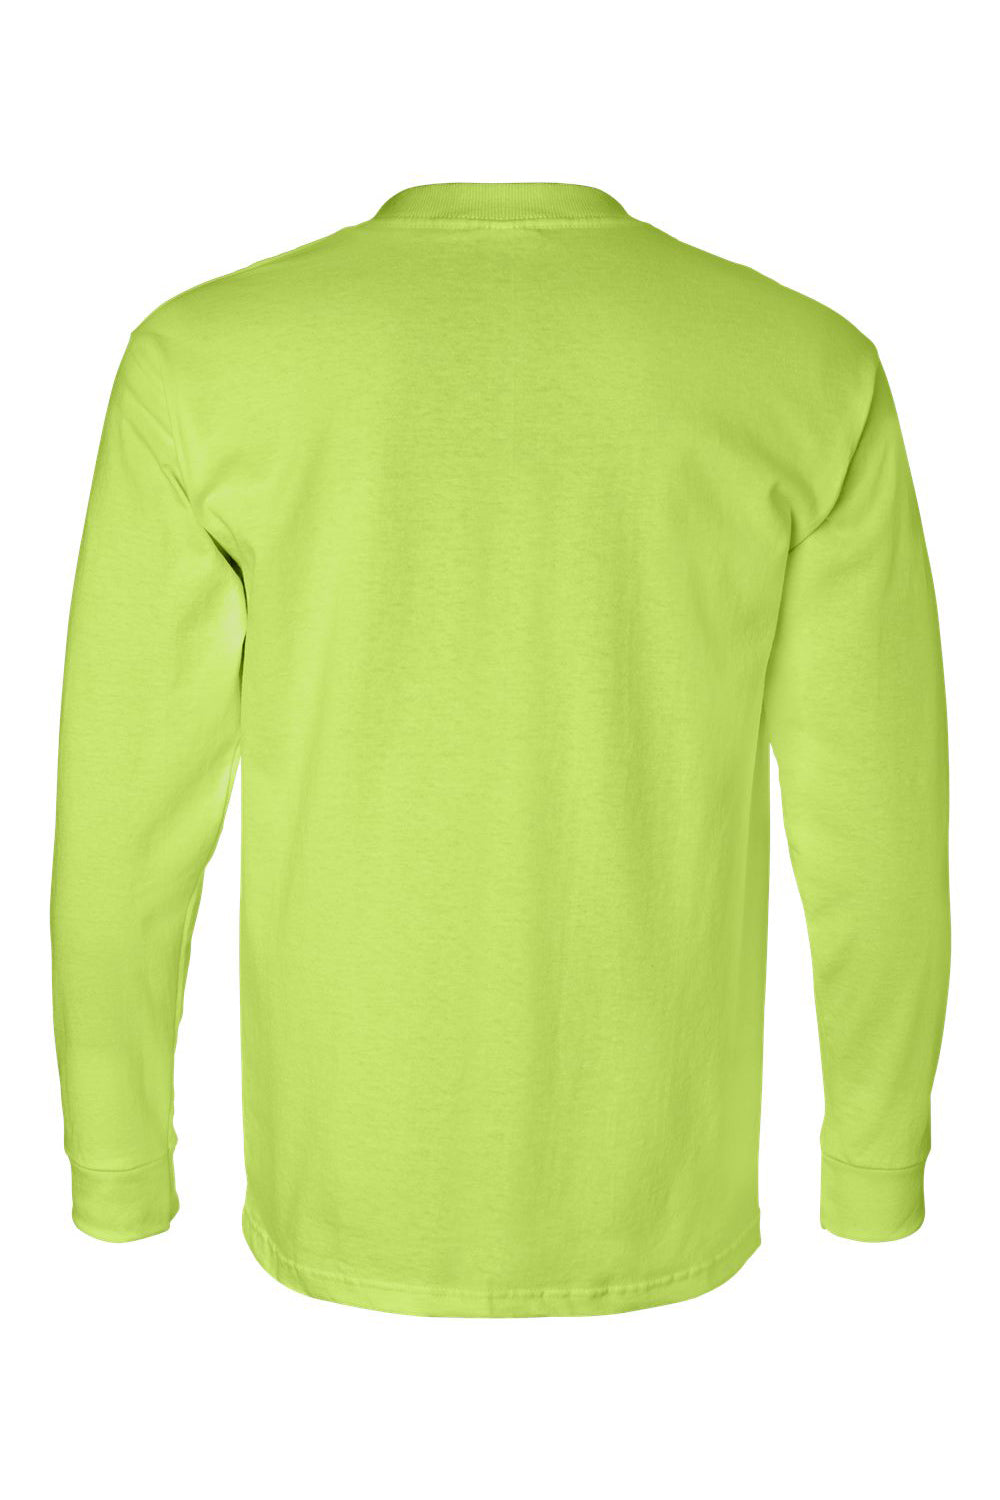 Bayside BA8100 Mens USA Made Long Sleeve Crewneck T-Shirt w/ Pocket Lime Green Flat Back